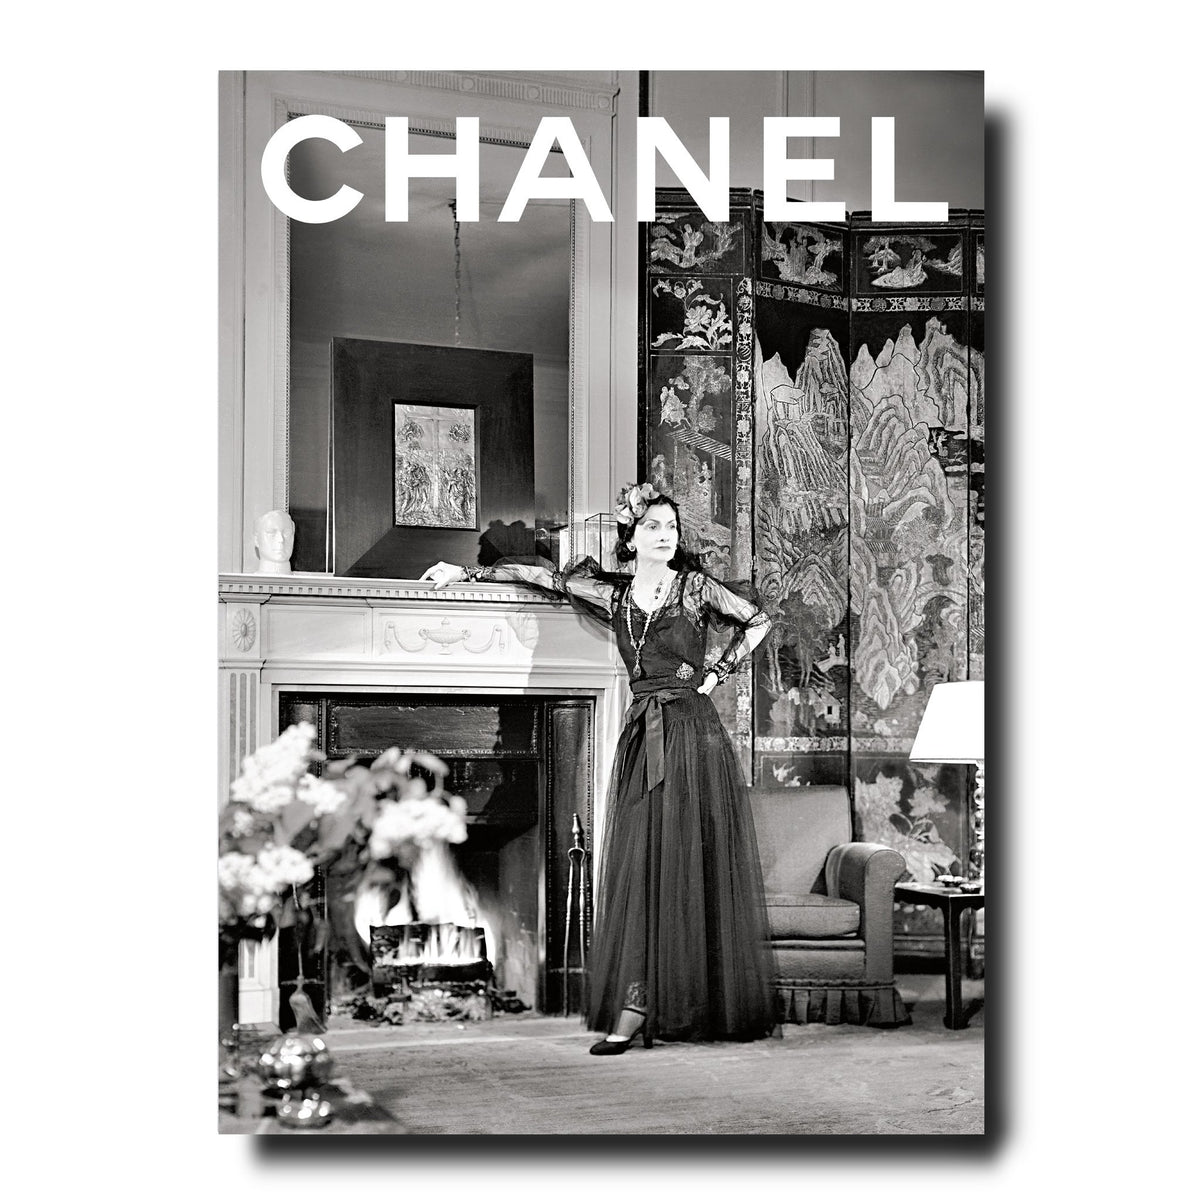 Chanel. Set of 3 Books